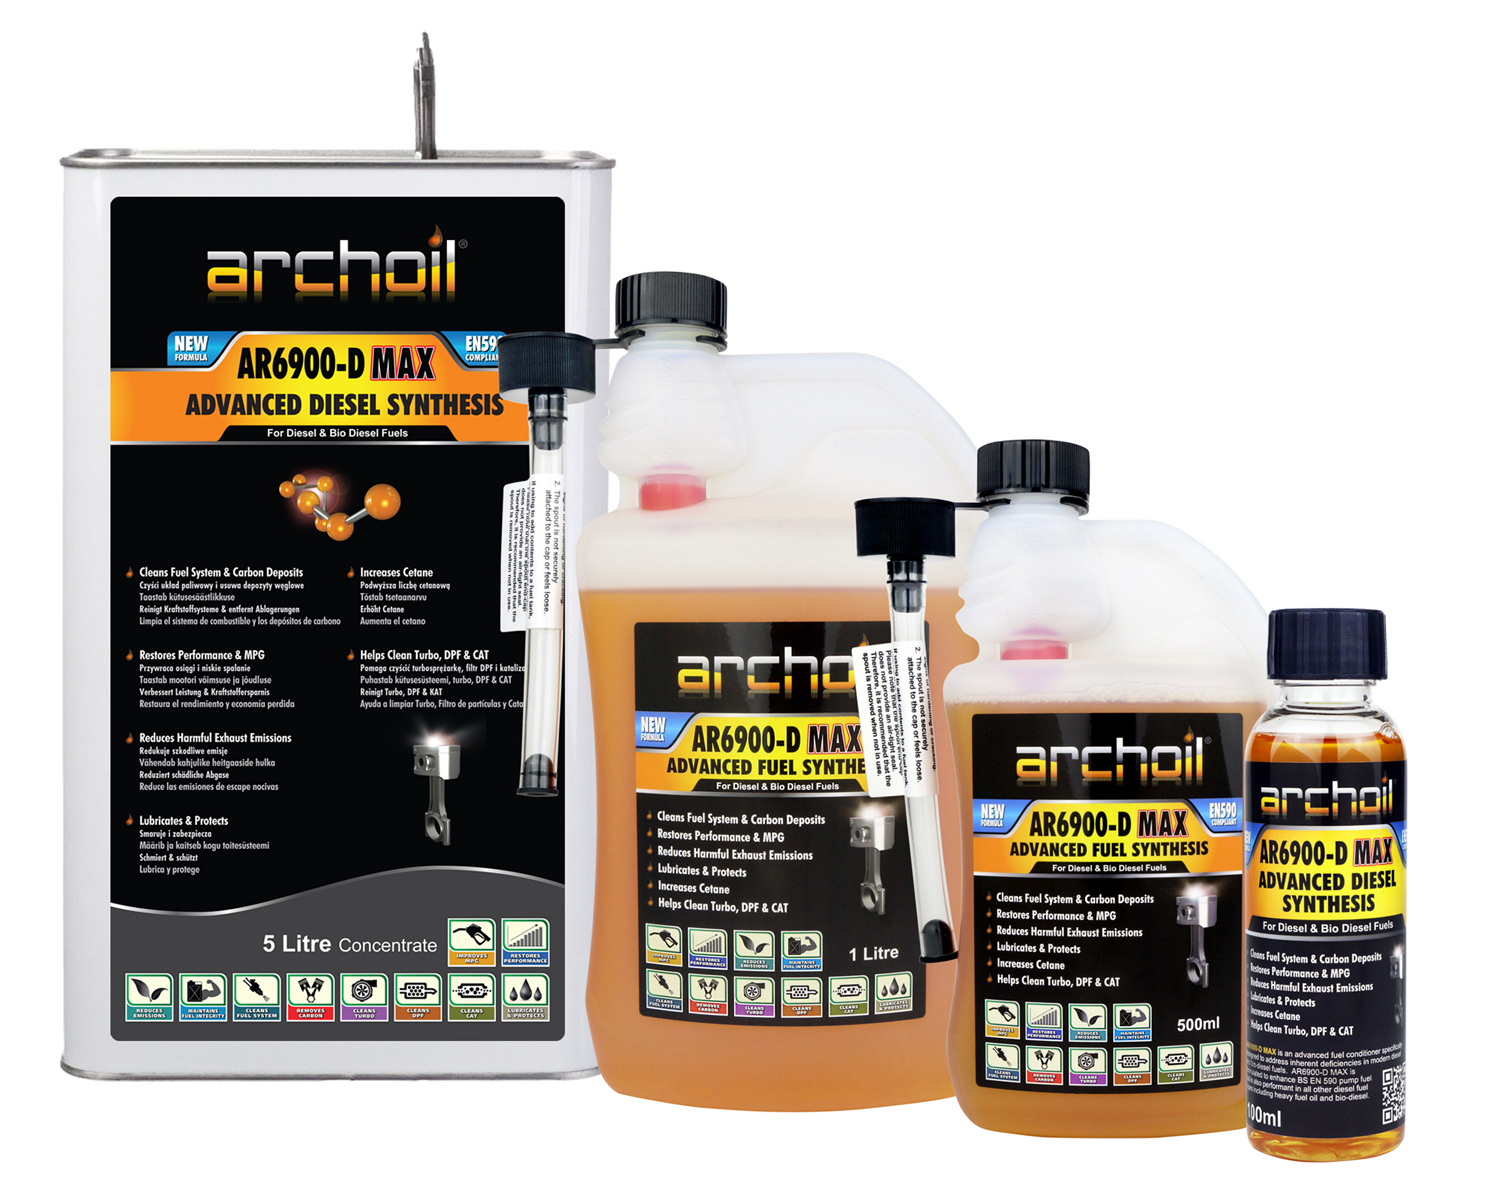 Archoil AR6900-D Max Advanced Diesel Fuel Synthesis